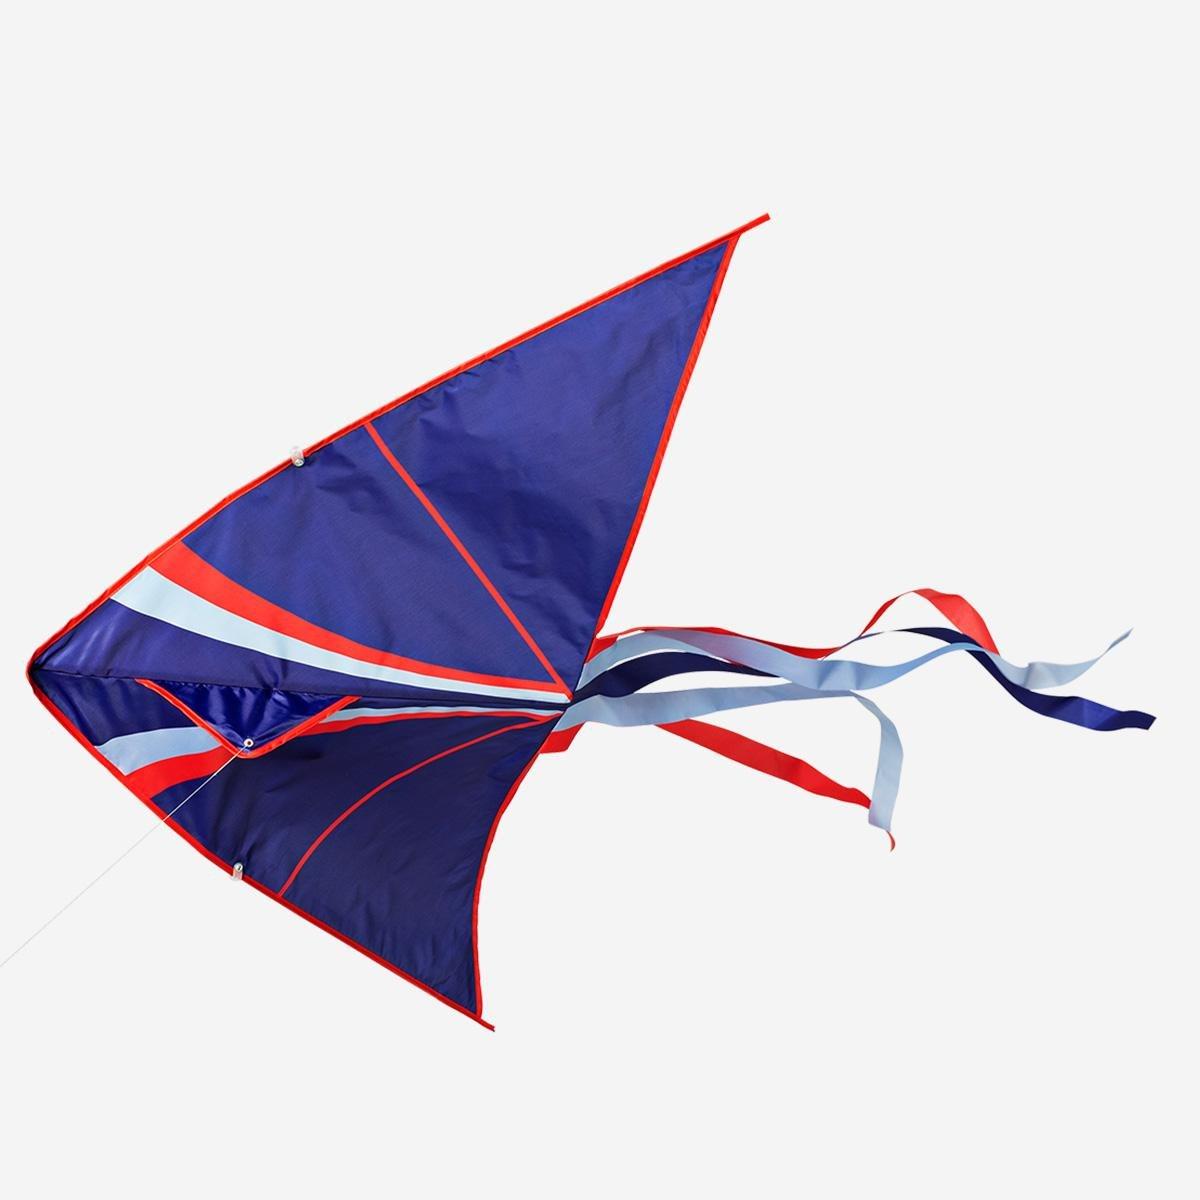 Blue kite